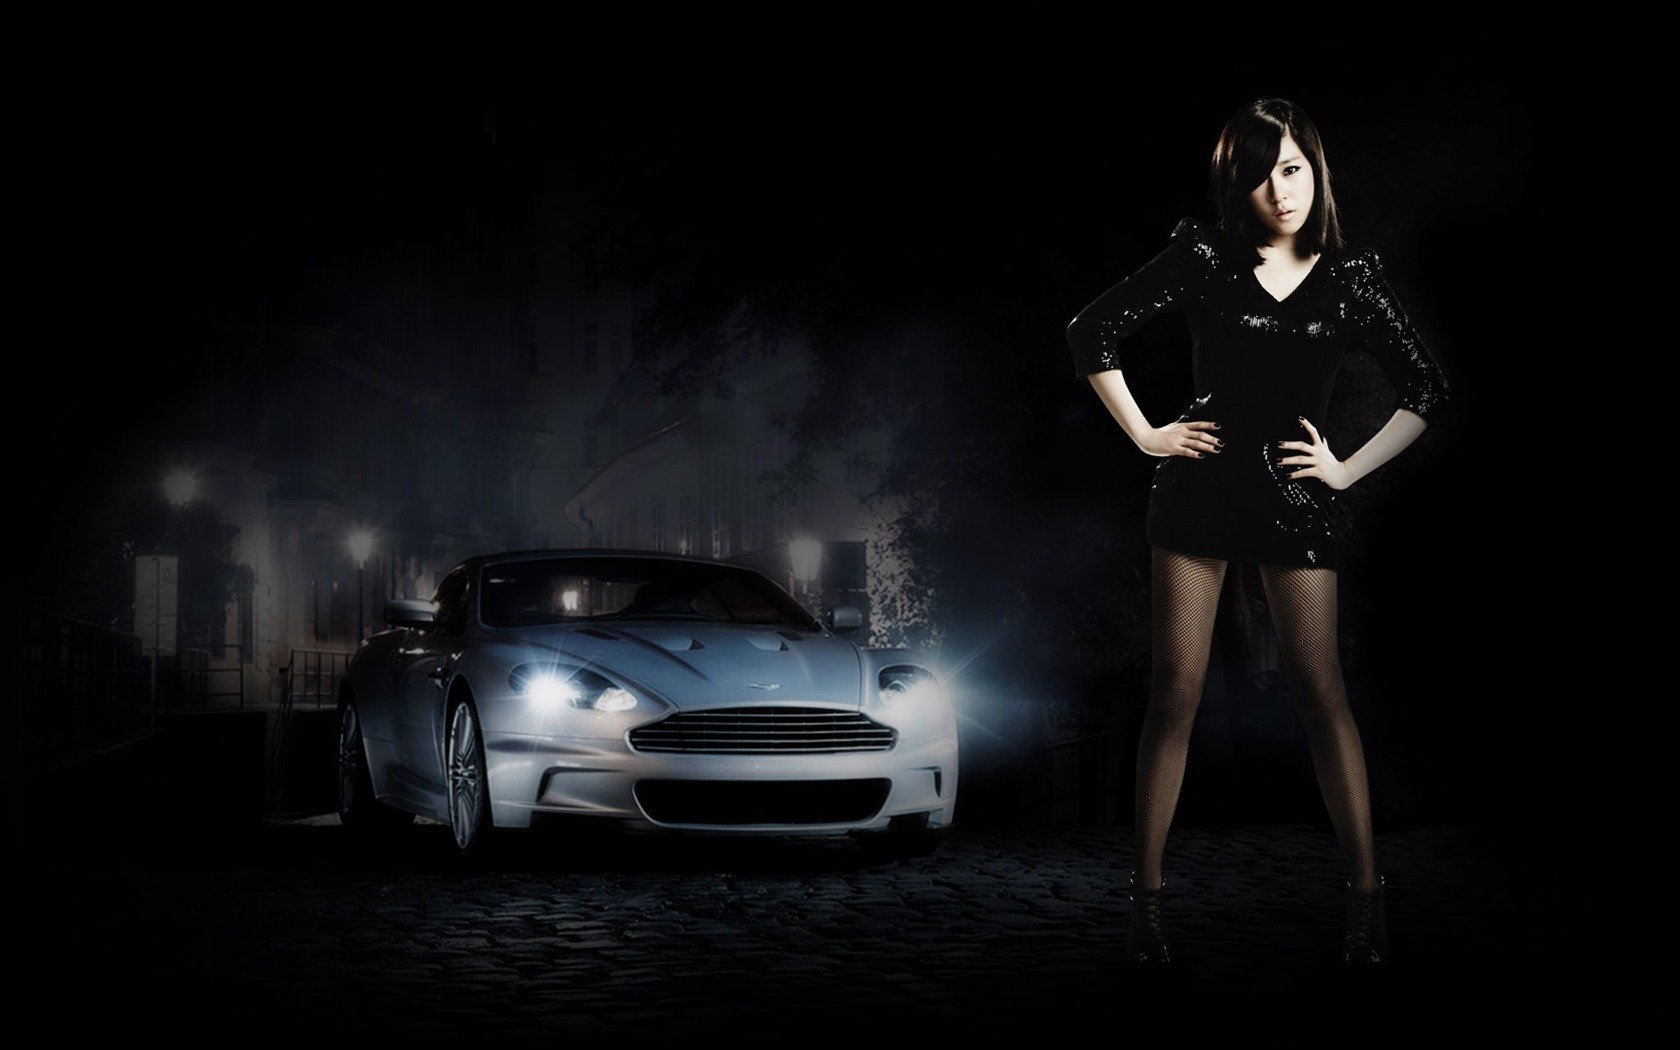 Живые обои girls. Девушка на фоне машины. Обои девушки и машины. Девушка машина черный фон. Девушки и авто на темном фоне.